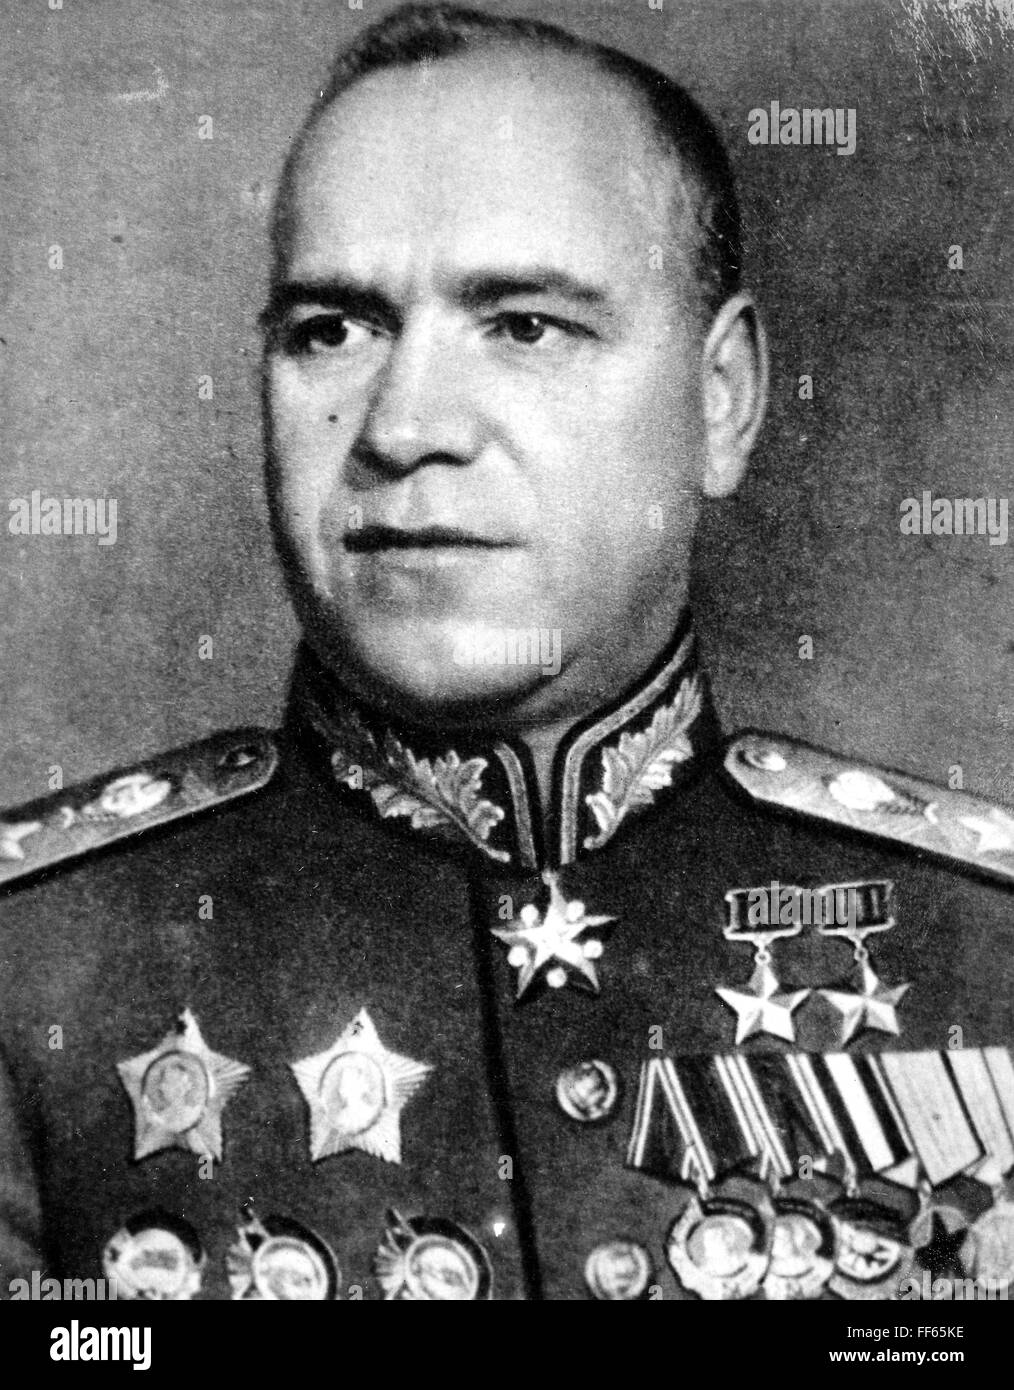 GEORGI K. ZHUKOV (1896-1974). /nGeorgi Konstantinovich Zhukov. Russian army officer. Photograph, 20th century. Stock Photo